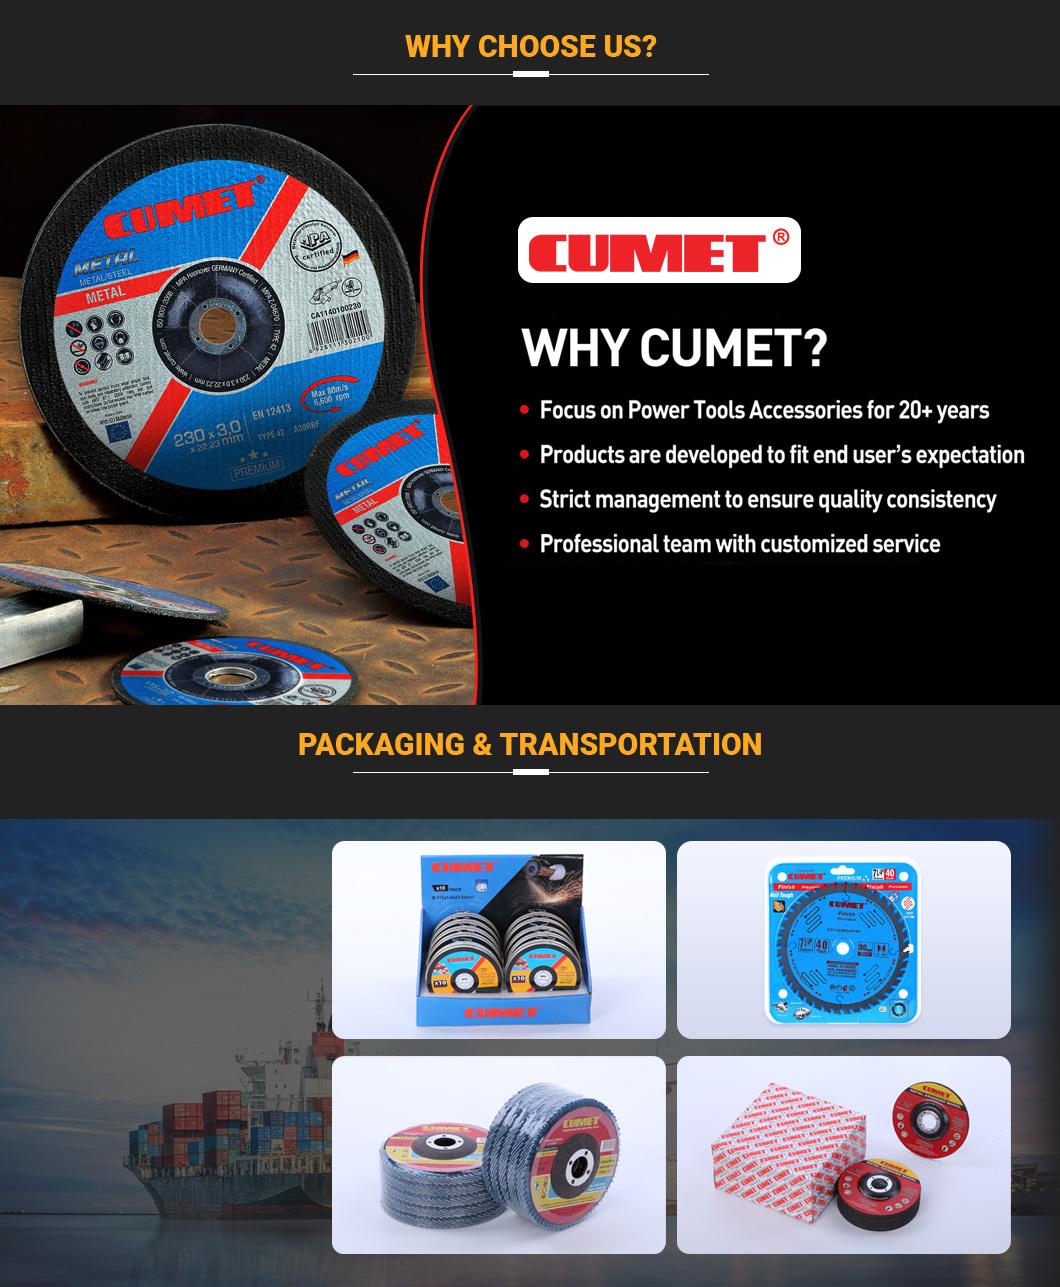 MPa En12413 Customized Cumet 105X1.0X16 Wheel Cutting Disc OEM